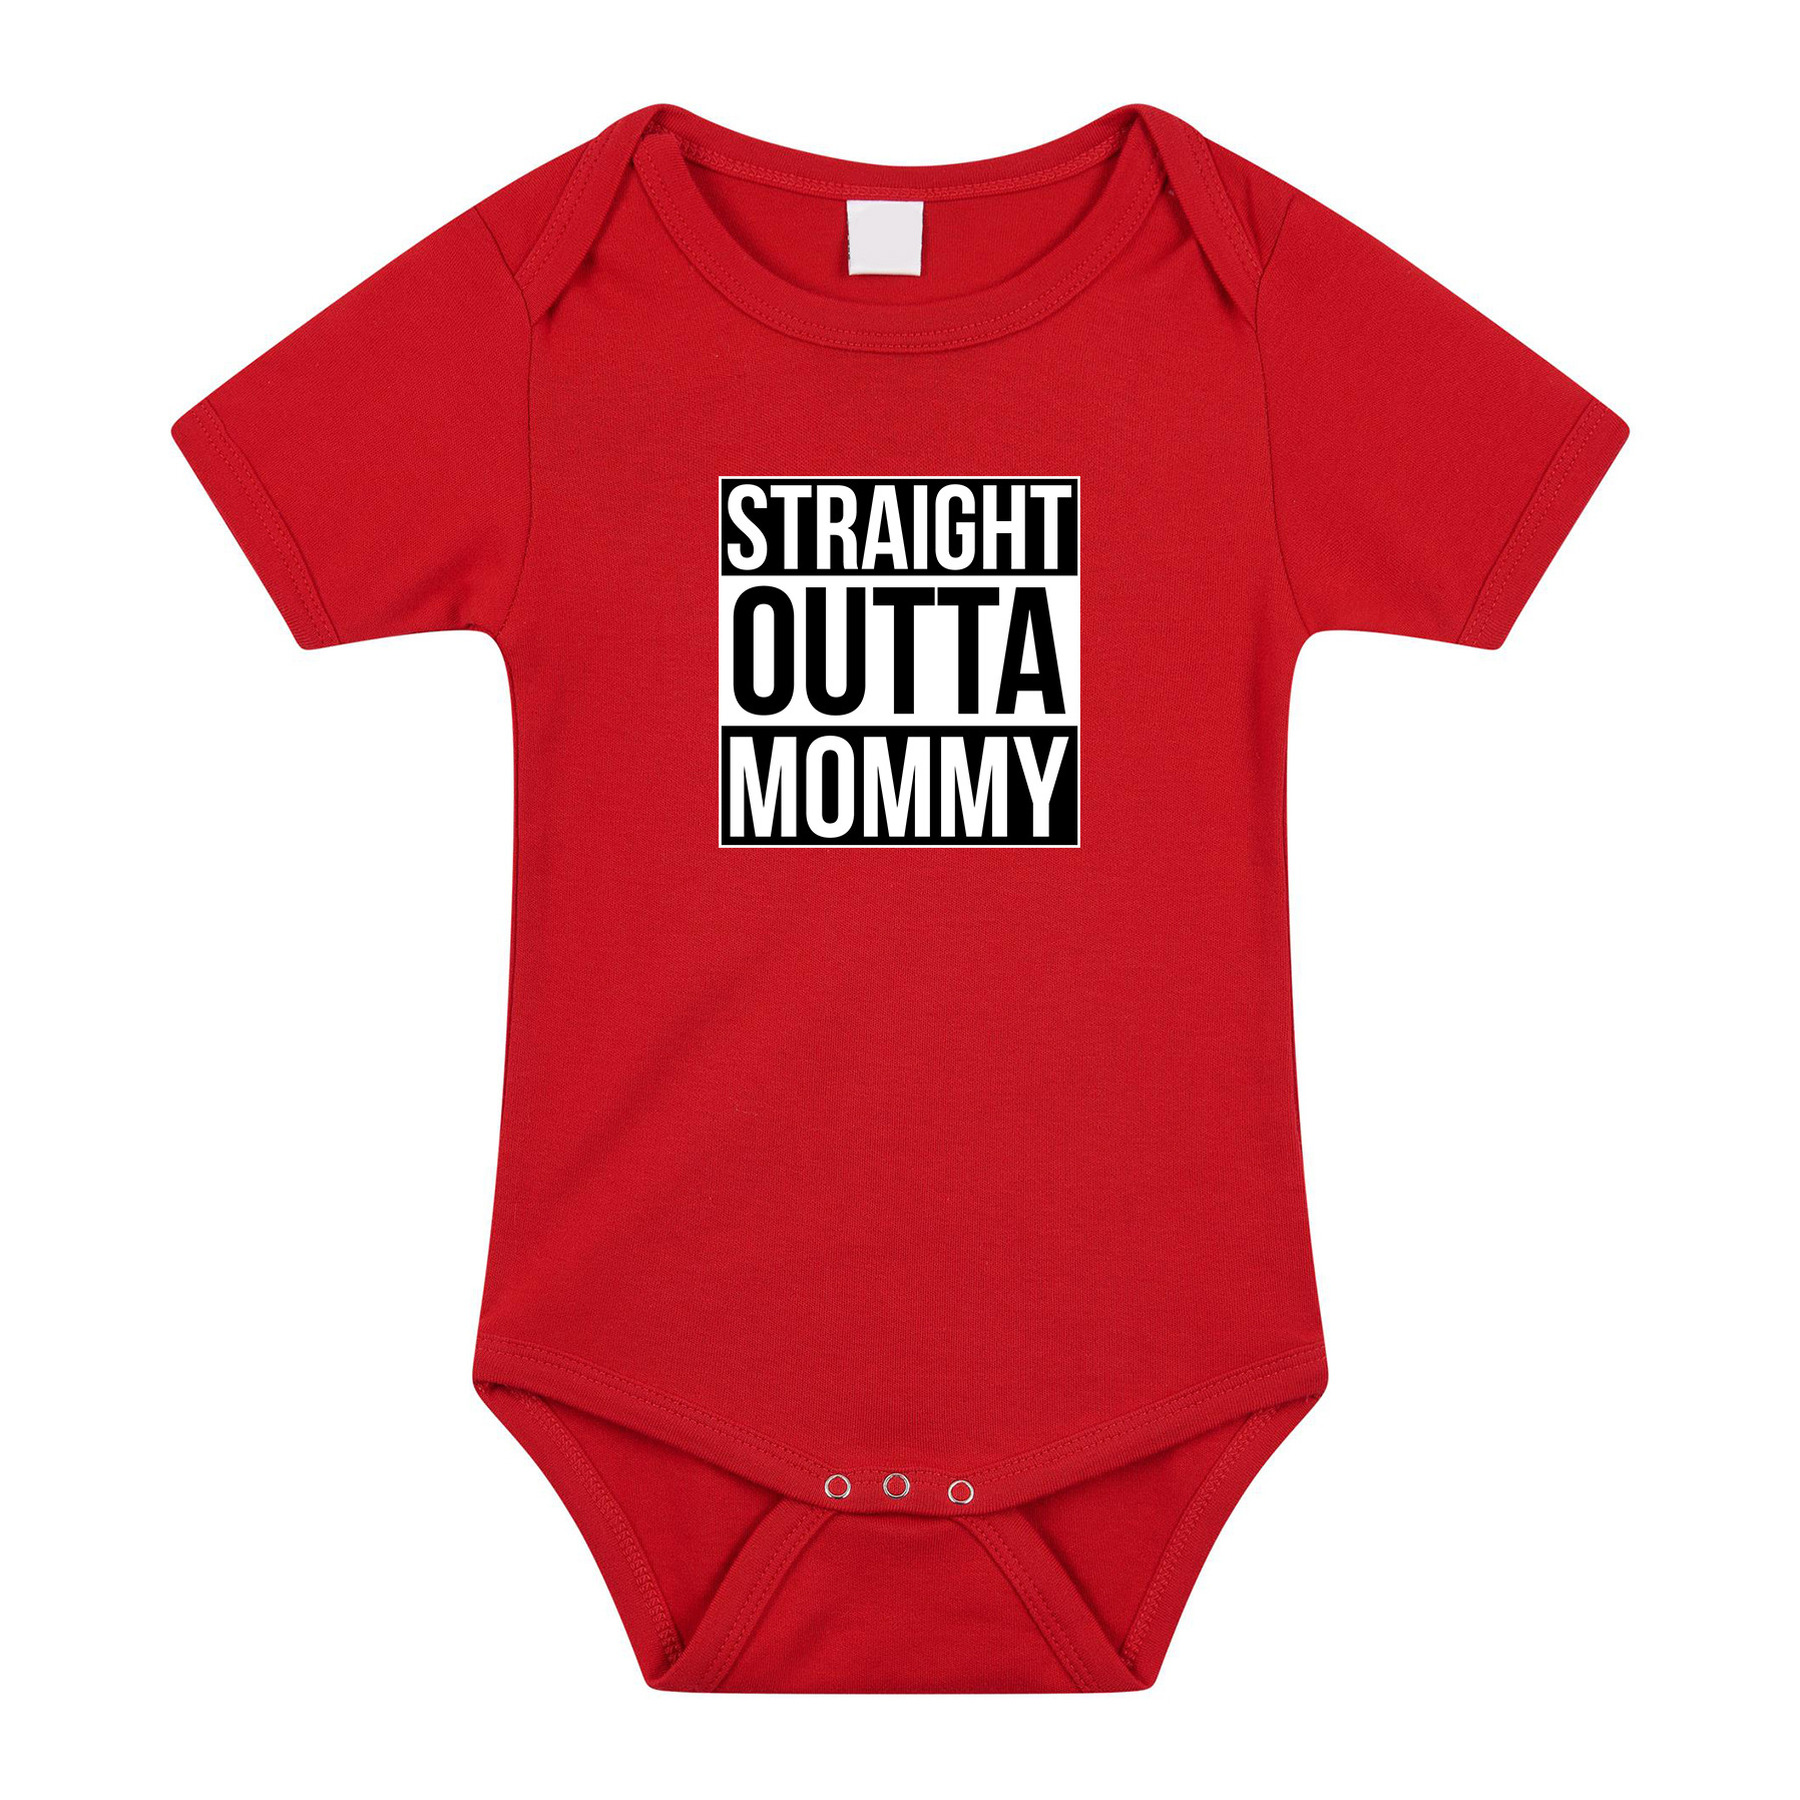 Straight outta mommy geboorte cadeau-kraamcadeau romper rood voor babys